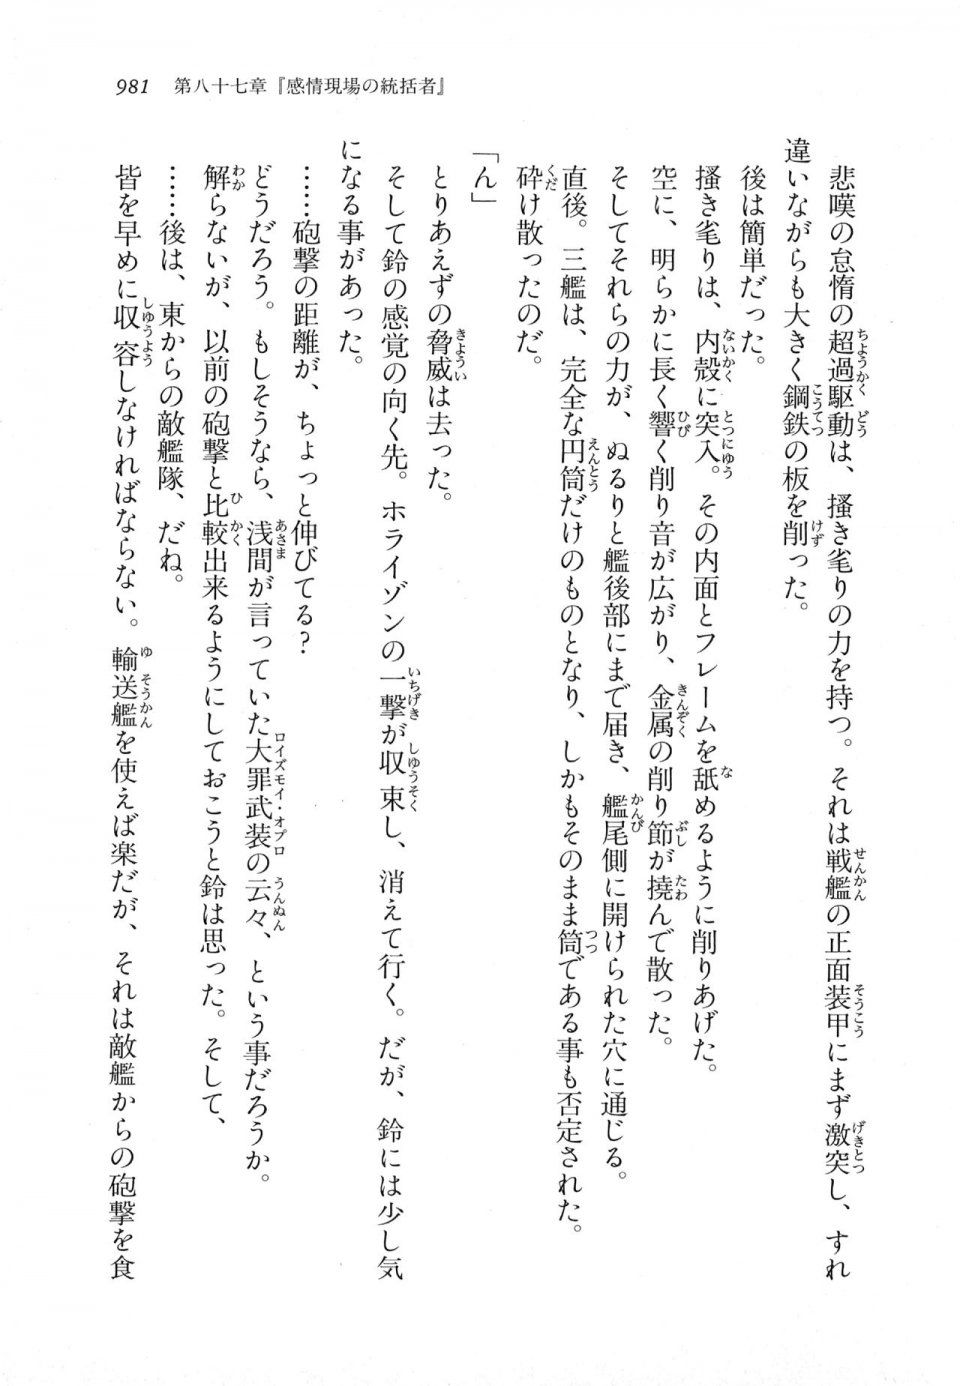 Kyoukai Senjou no Horizon LN Vol 18(7C) Part 2 - Photo #420